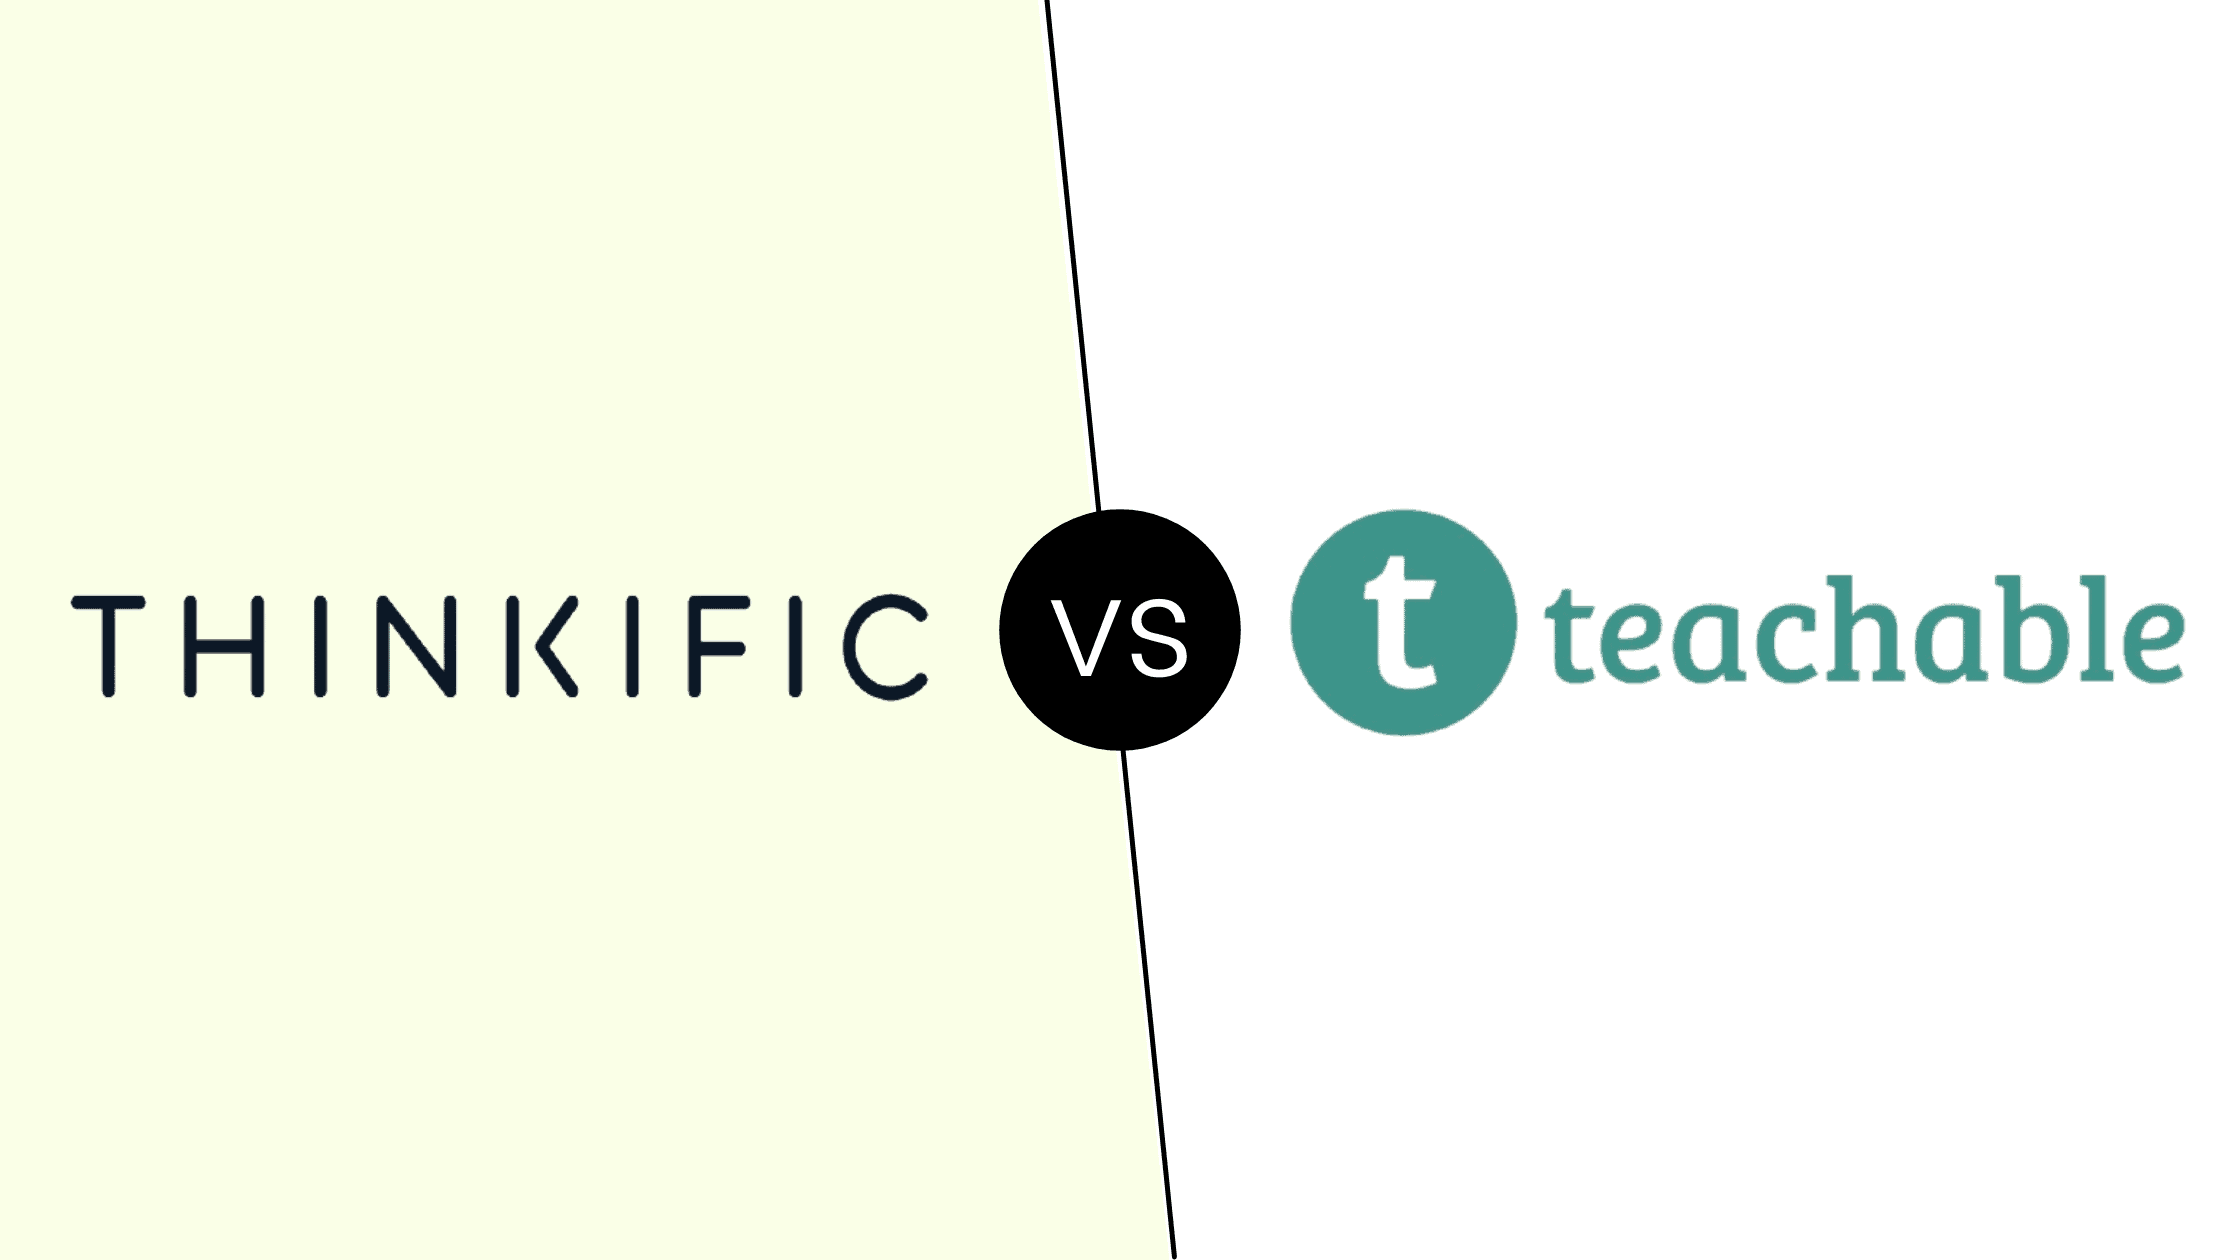 Thinkific vs Teachable